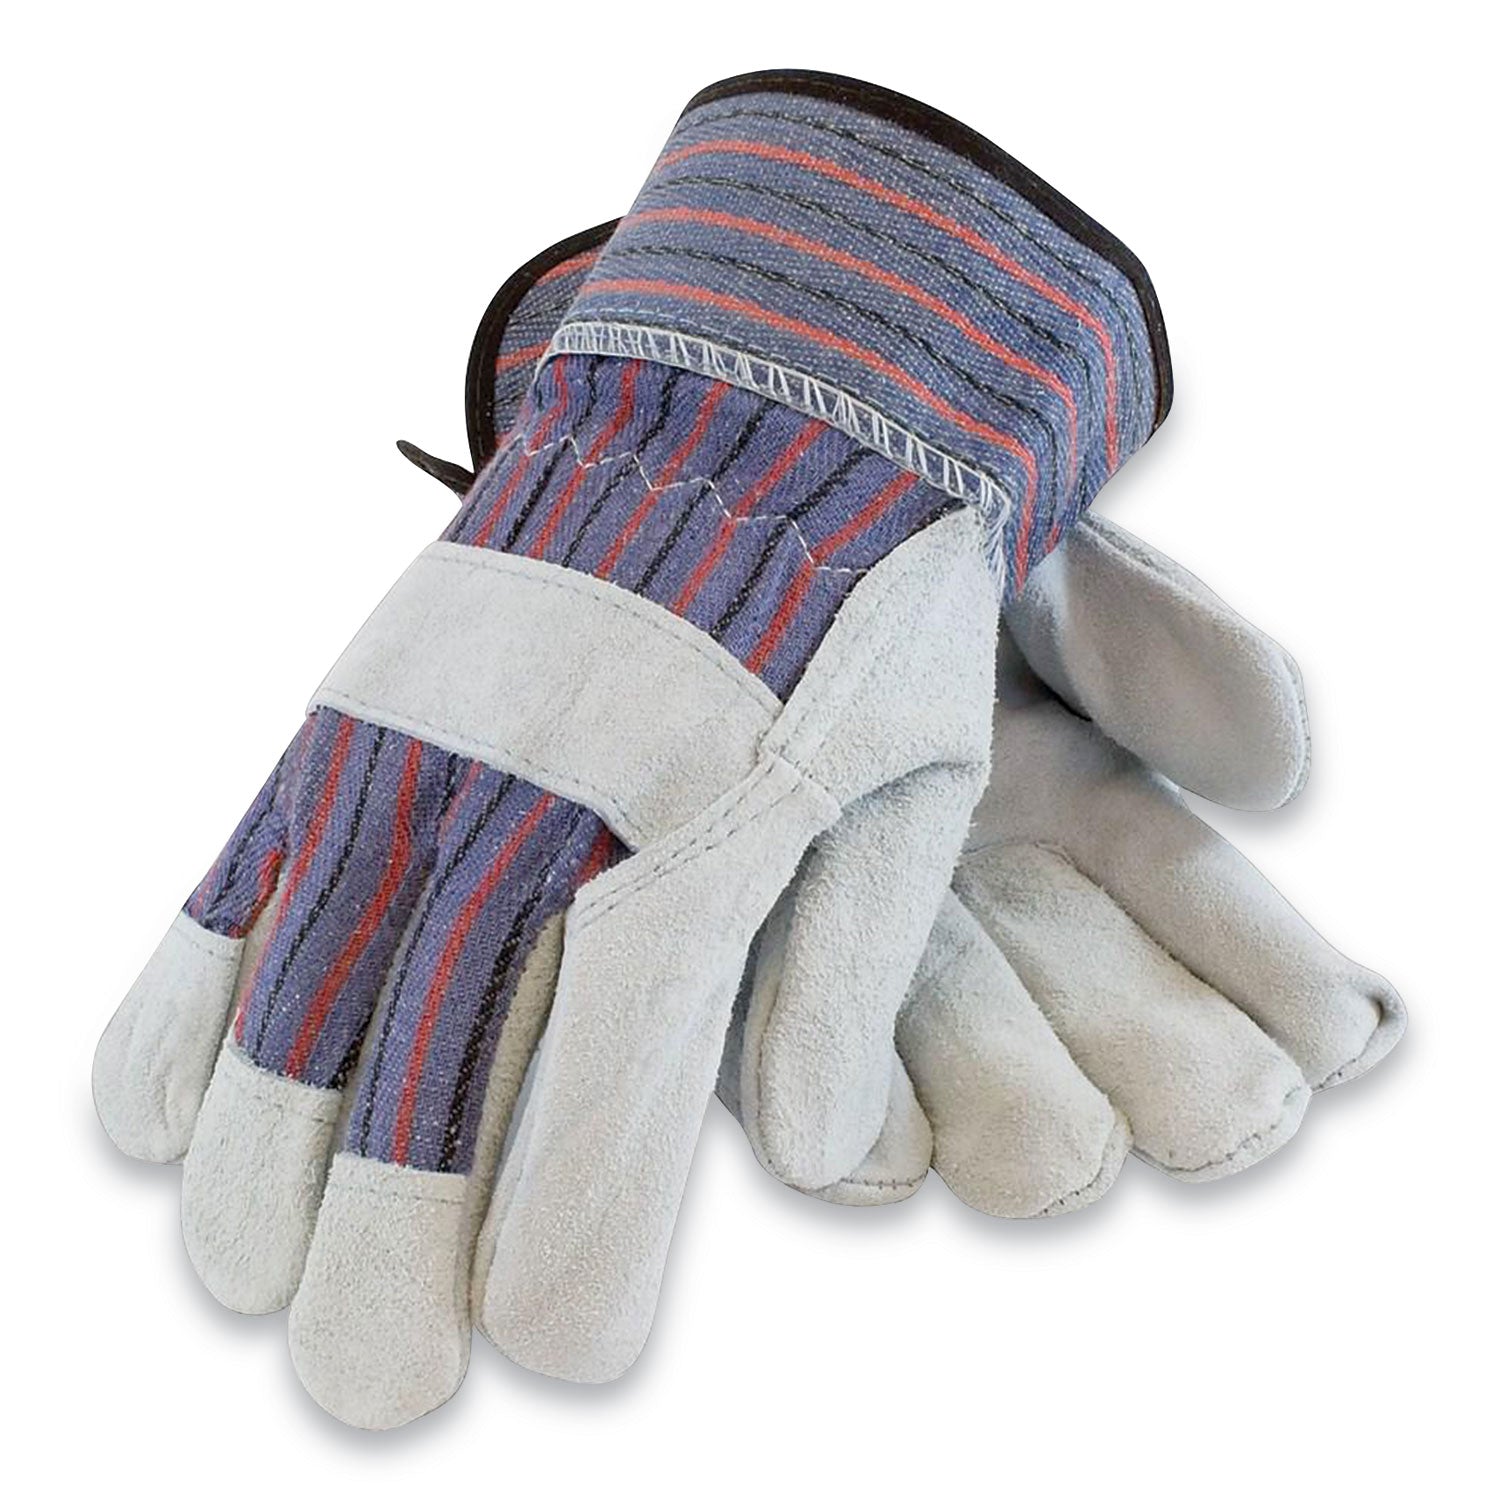 shoulder-split-cowhide-leather-palm-gloves-b-c-grade-large-blue-gray-12-pairs_pid847532l - 2